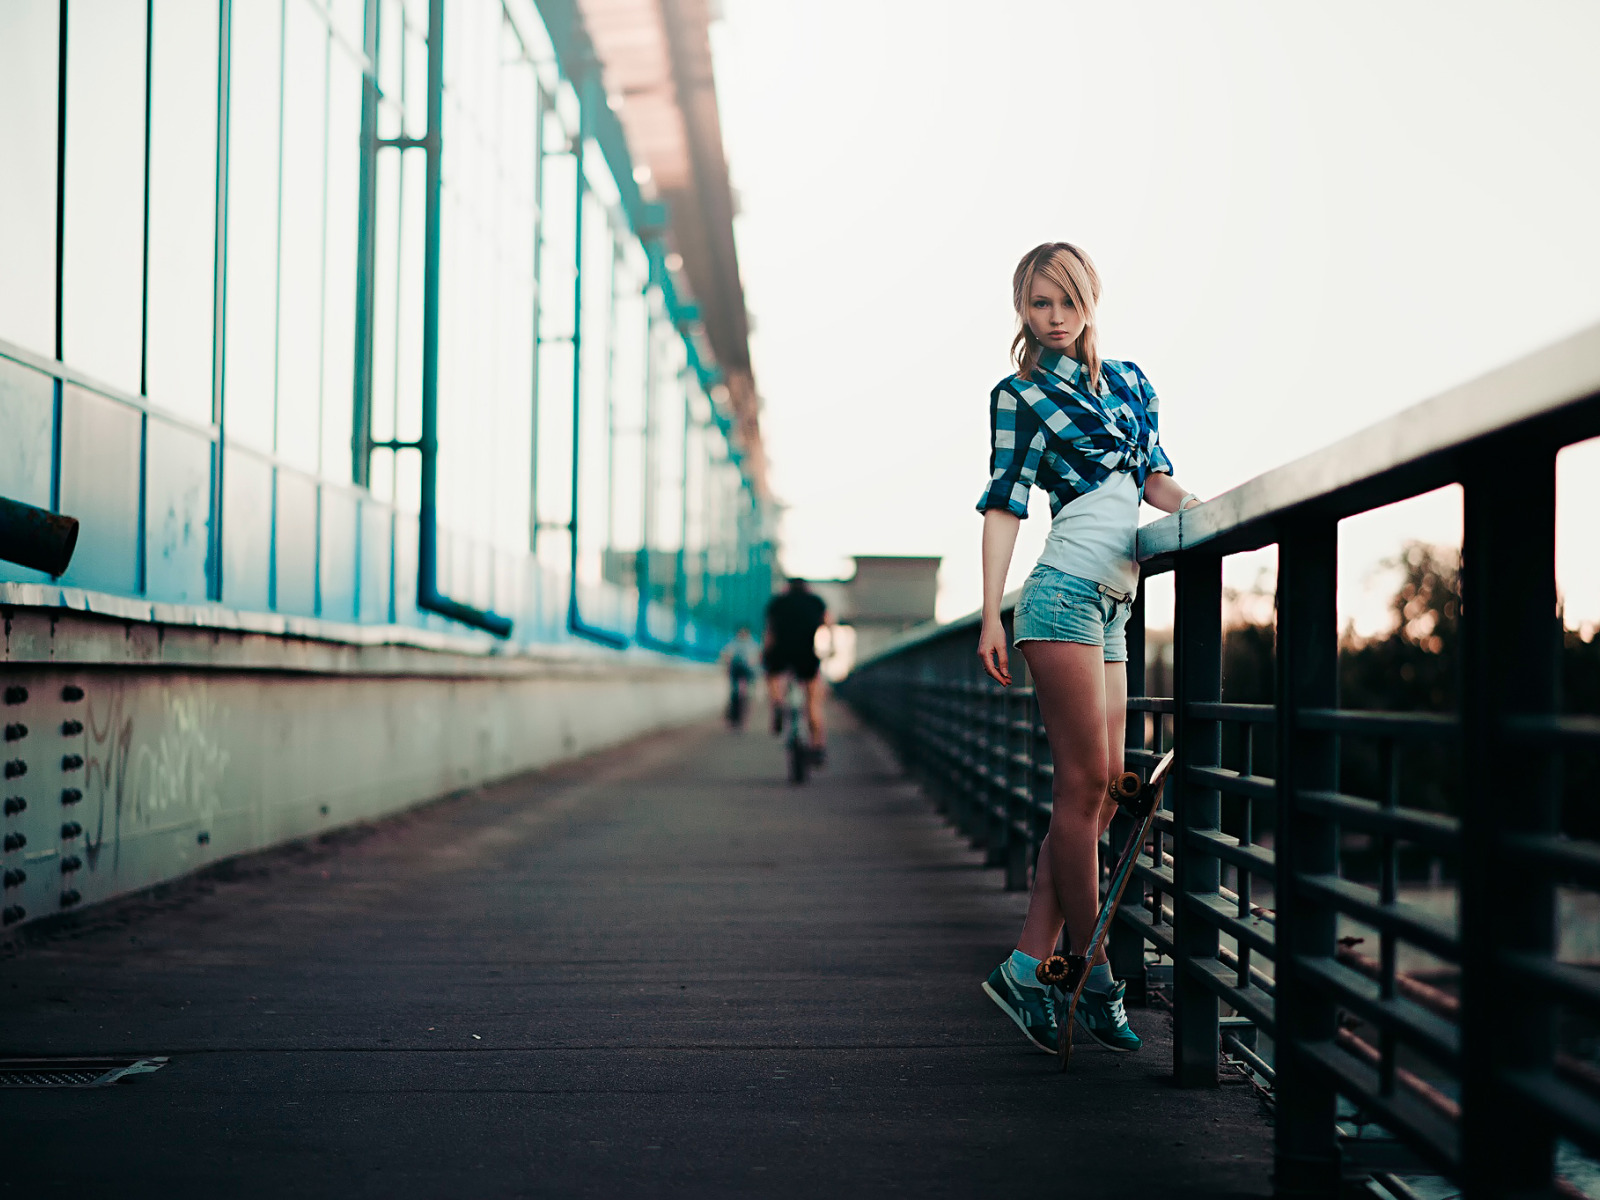 Девушка по городу mp3. Фотосессия в городе. Фотосессия на мосту девушка. Фотосессия в городском стиле. Девушка блондинка на мосту.